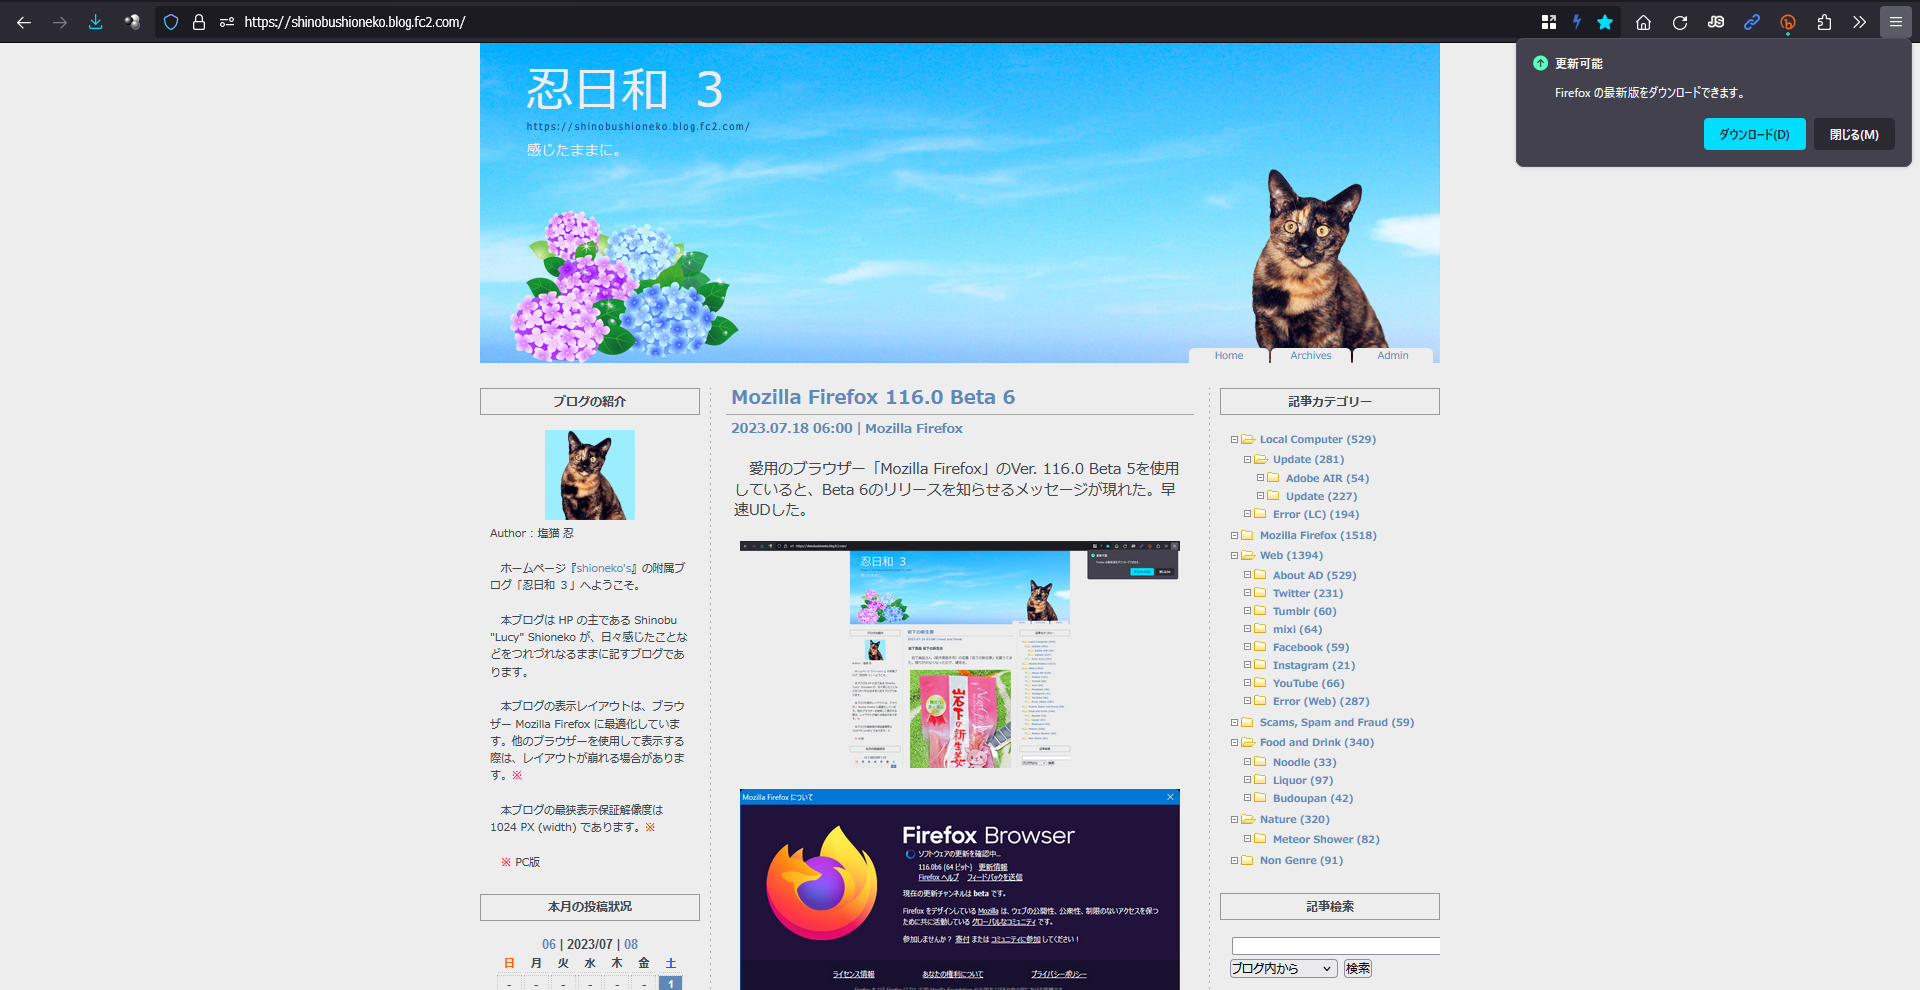 Mozilla Firefox 116.0 Beta 7